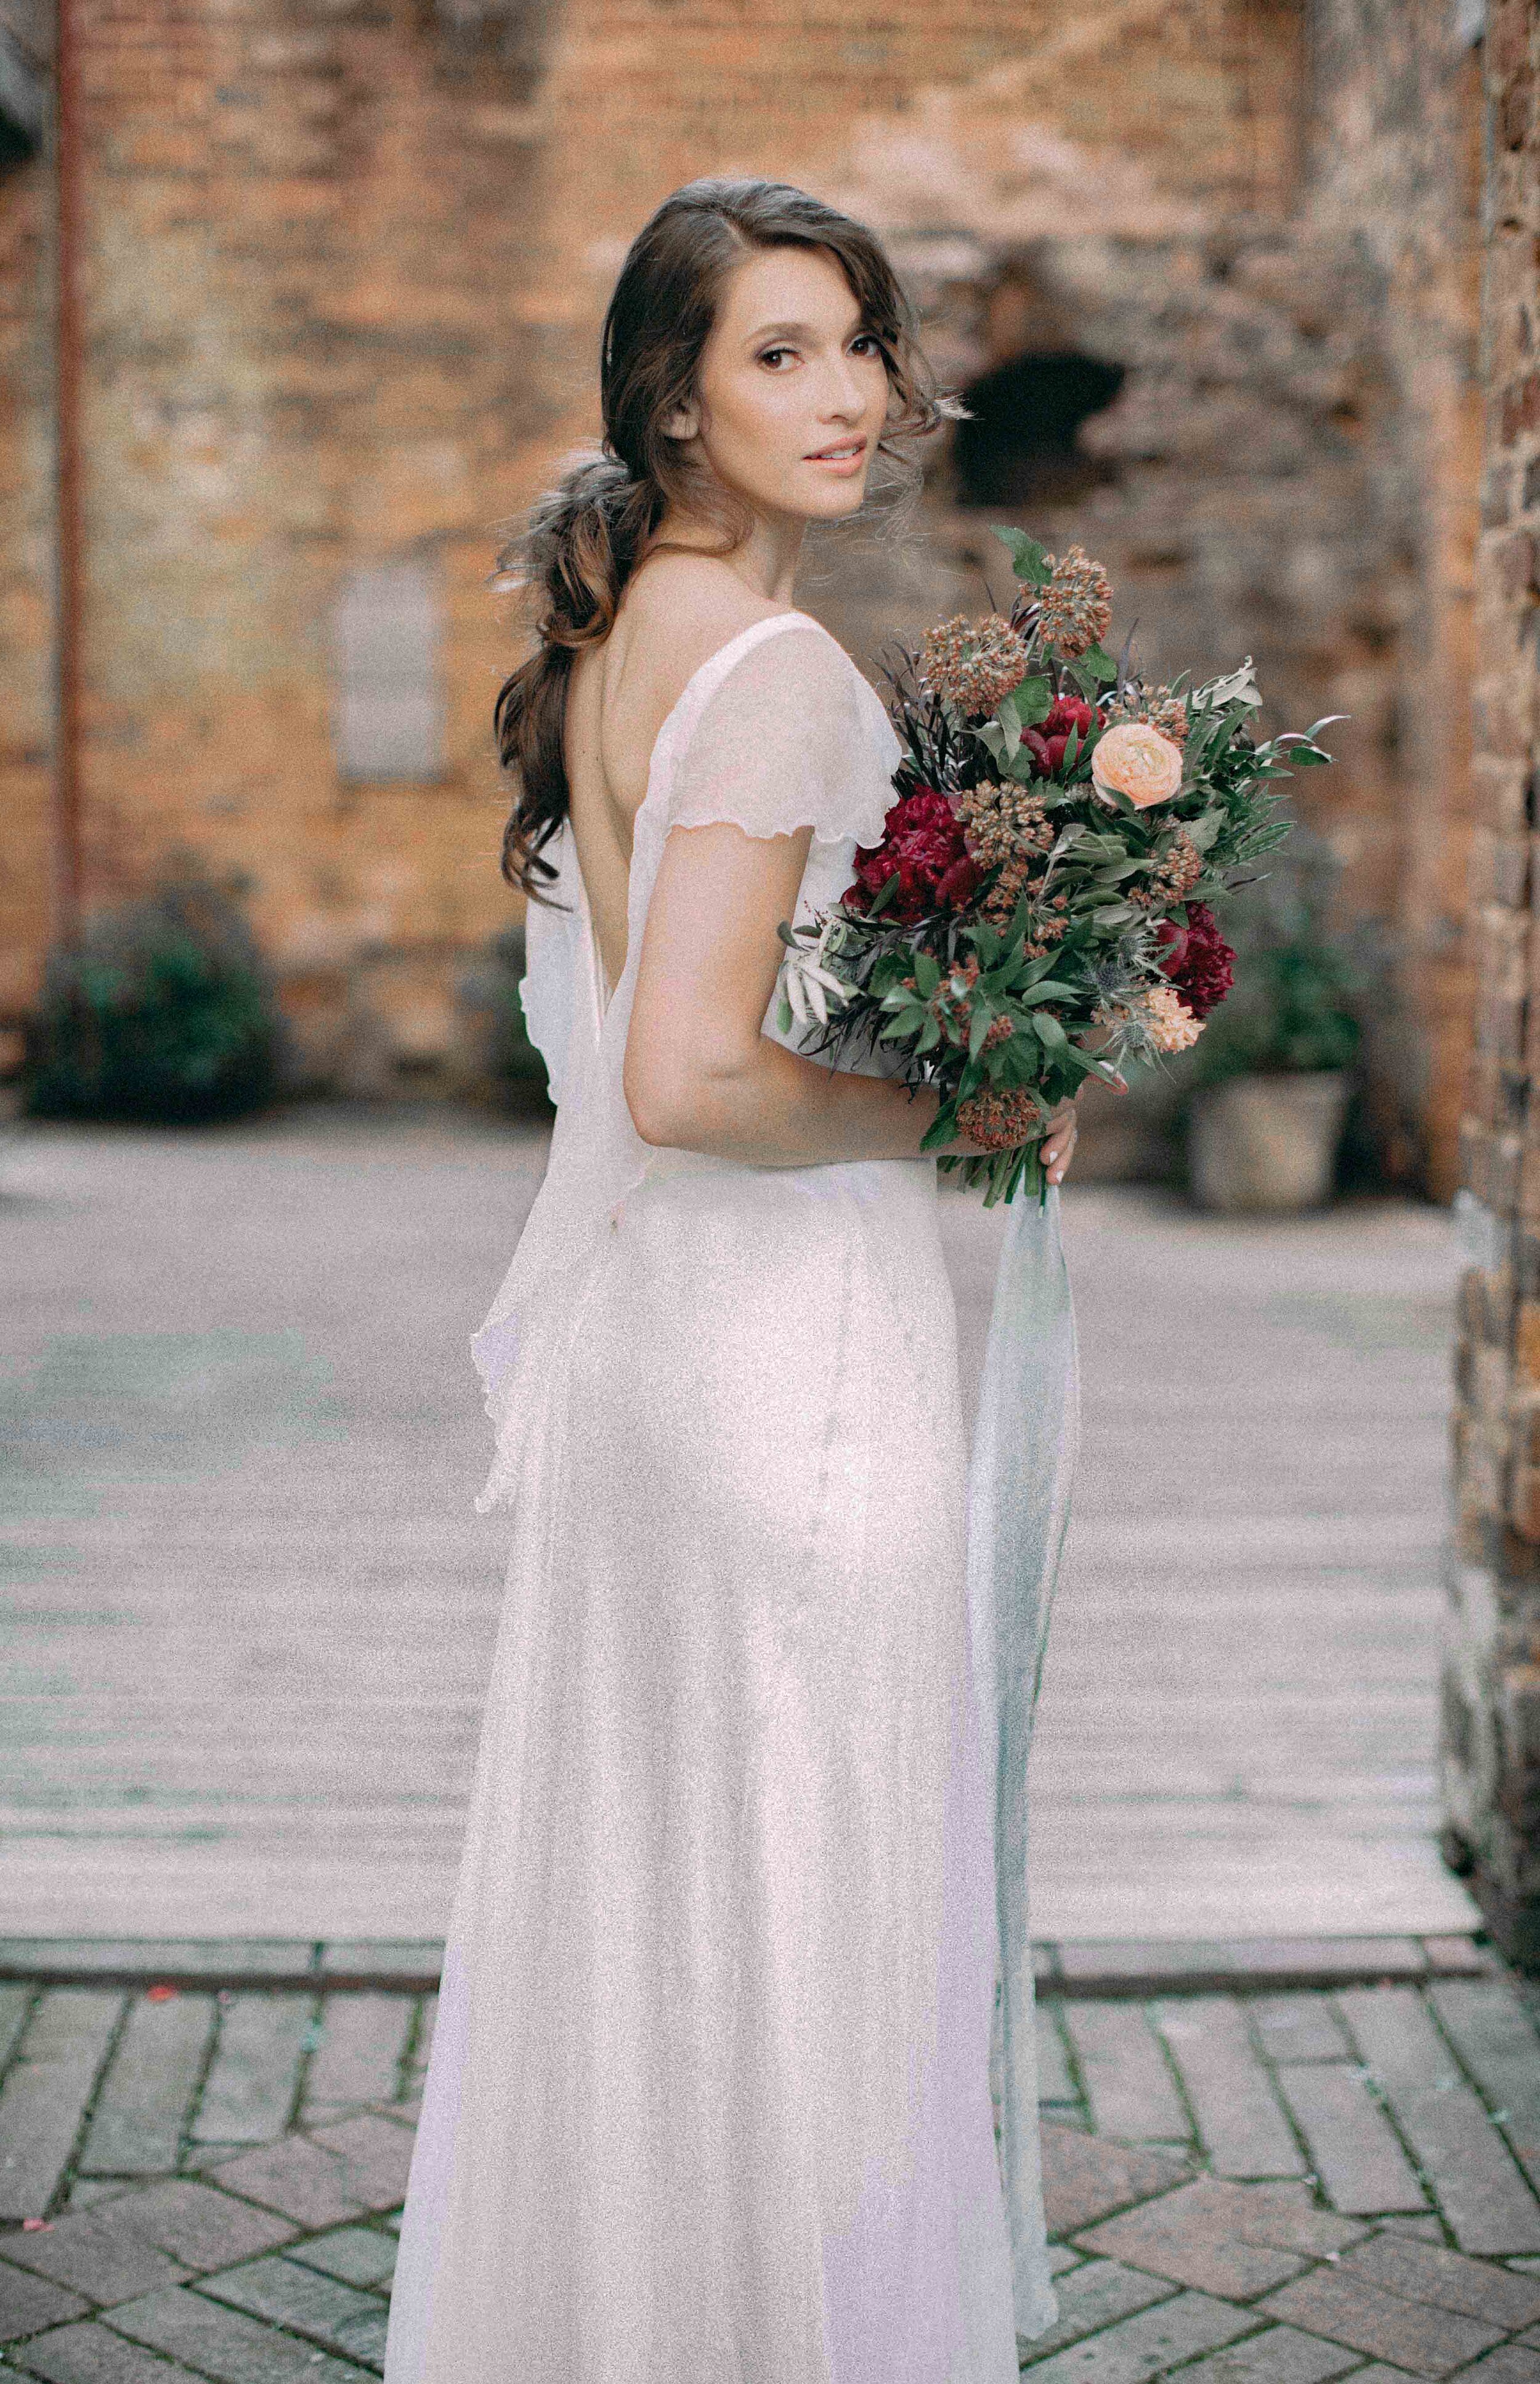 Dreamy boho bride with backless Chiffon wedding dress and wild flower bouquet